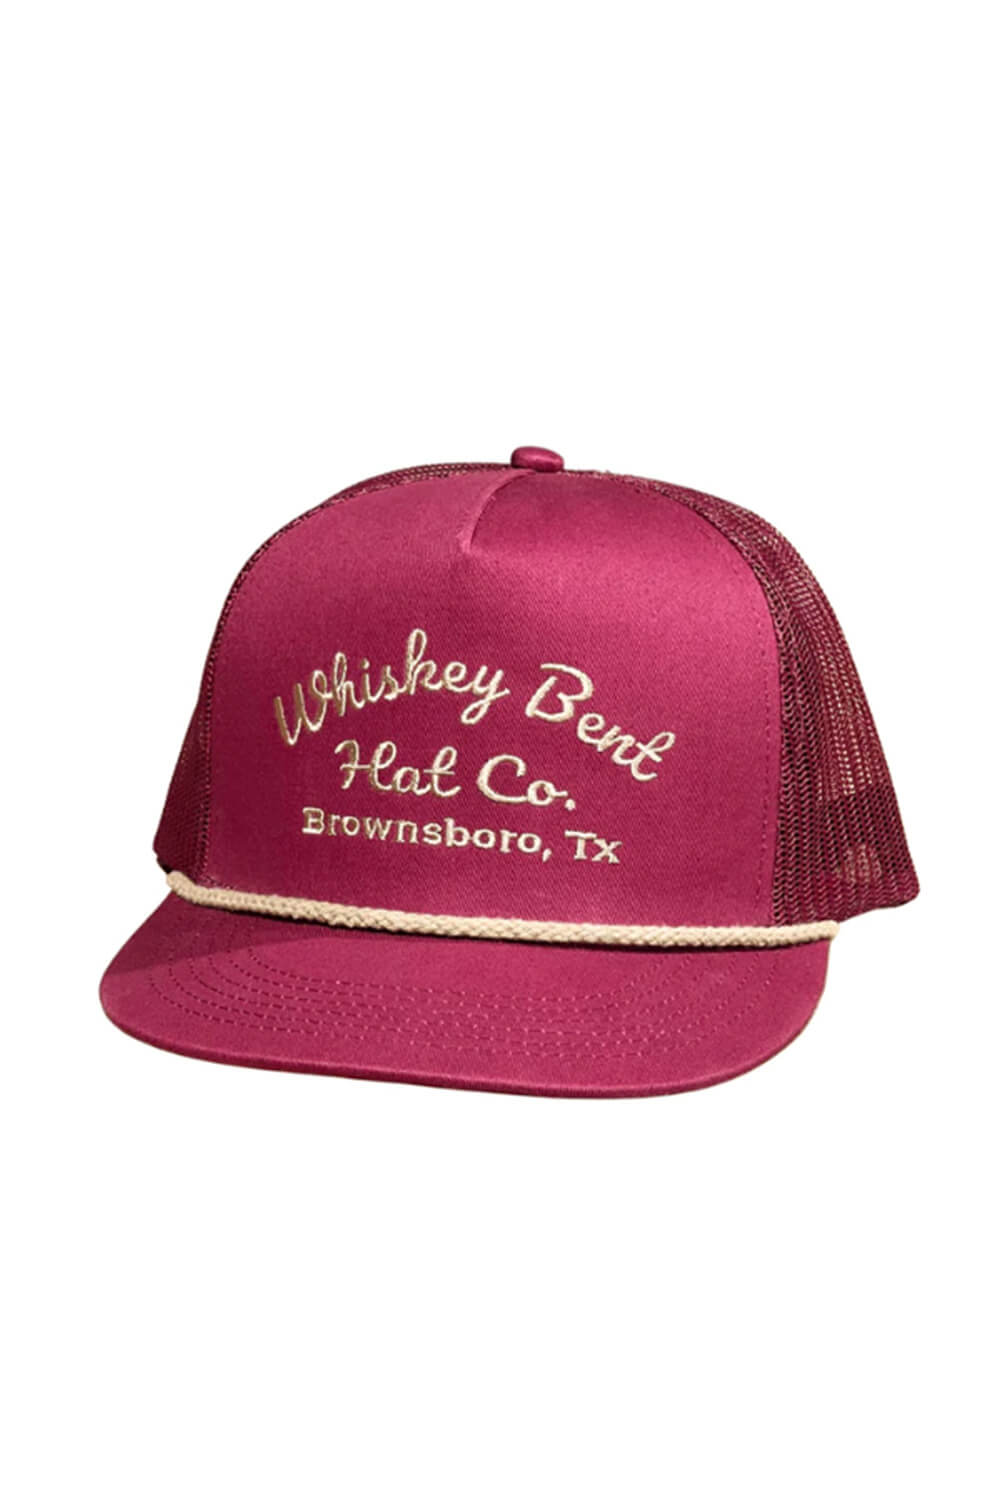 Whiskey Bent Sale Barn Trucker Hat for Men in Maroon at Glik's , Os